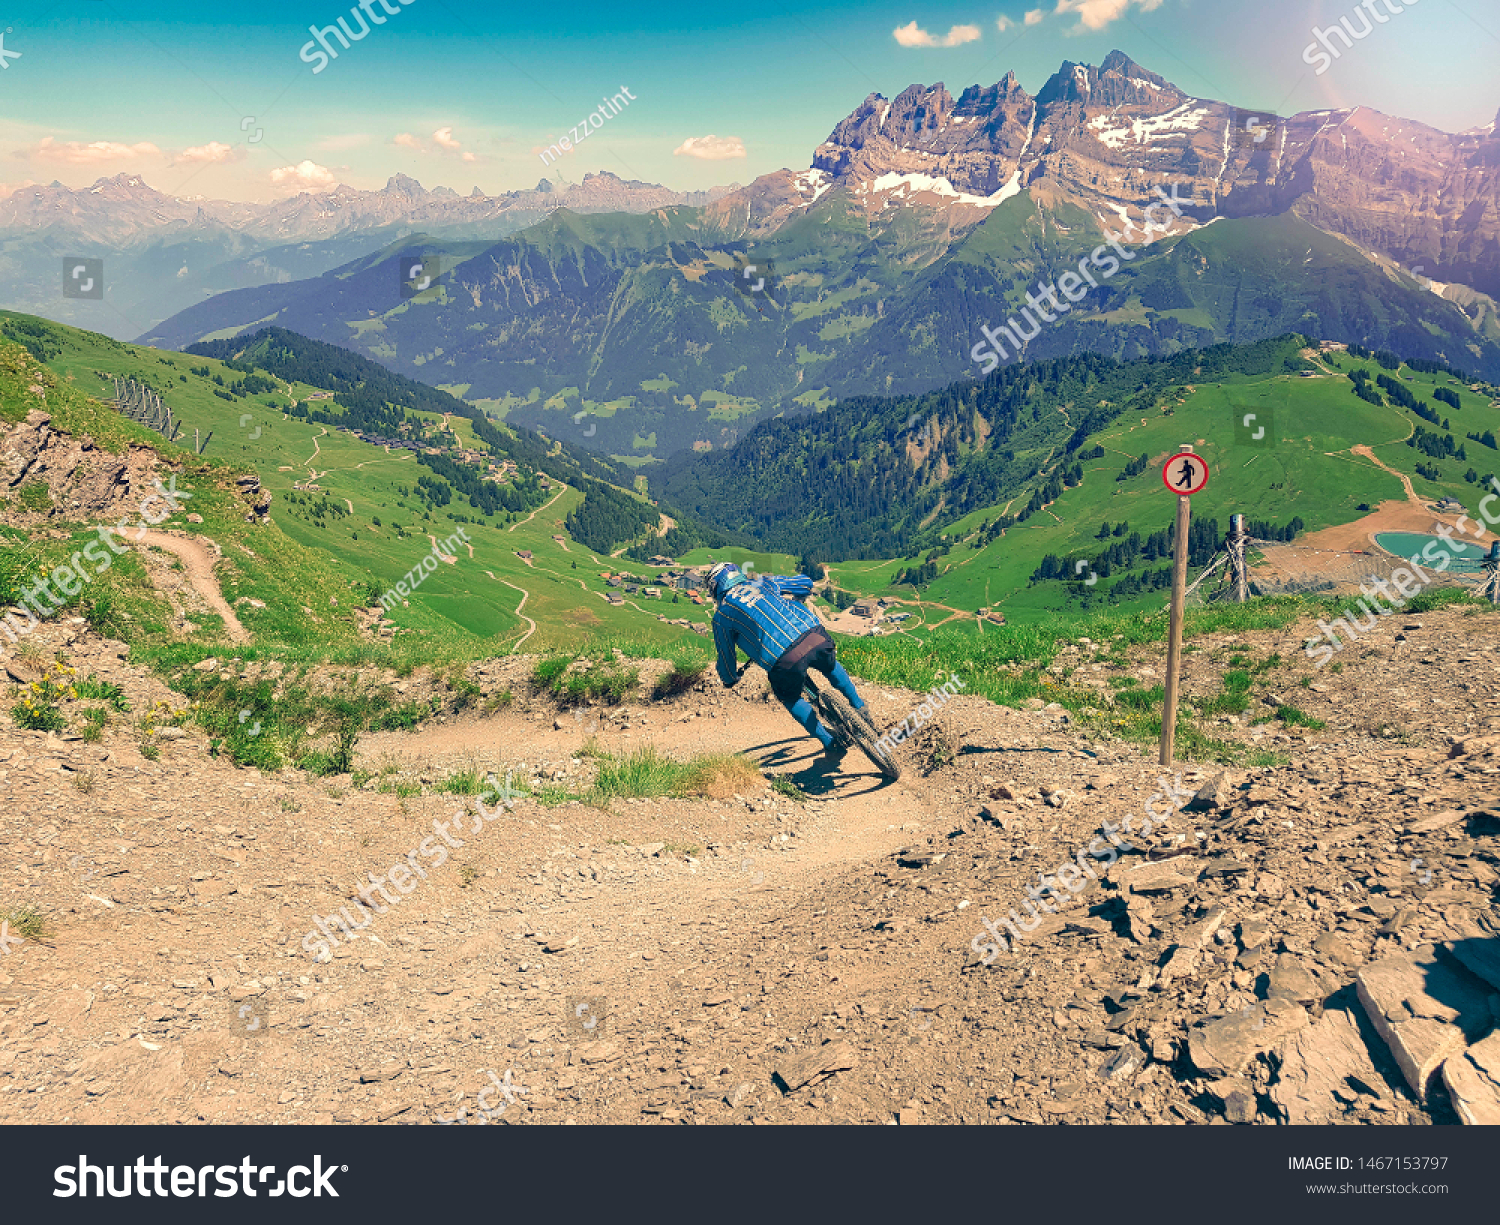 Mountain bike downhill rider on downhill trail #1467153797